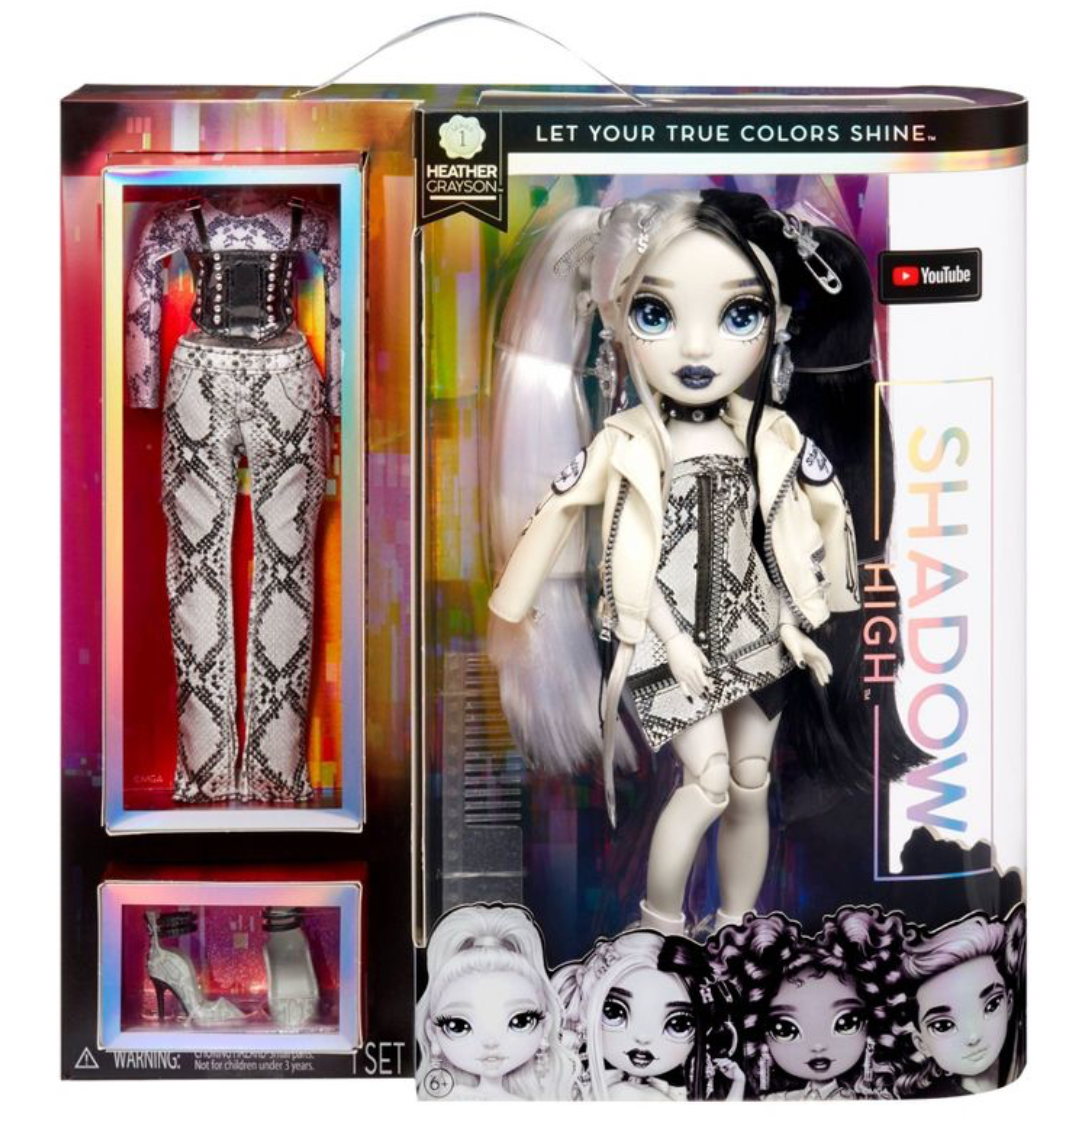 Shadow High Heather Grayson Fashion Doll Toy New With Box